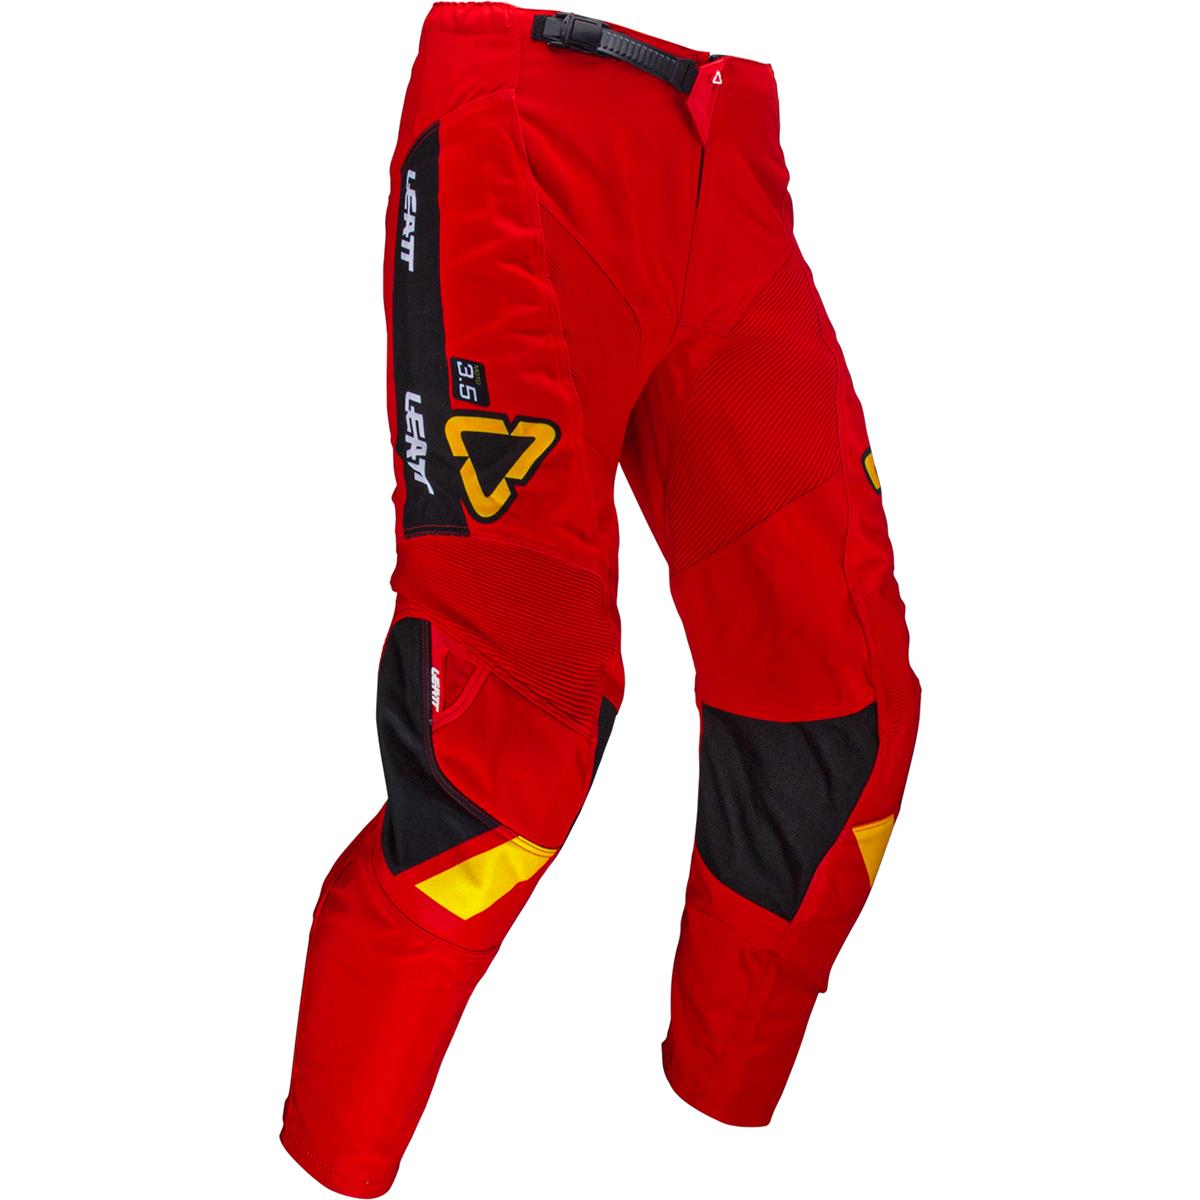 Completo Motocross Leatt 3.5 Pantaloni e Maglia Rosso Enduro Kit moto